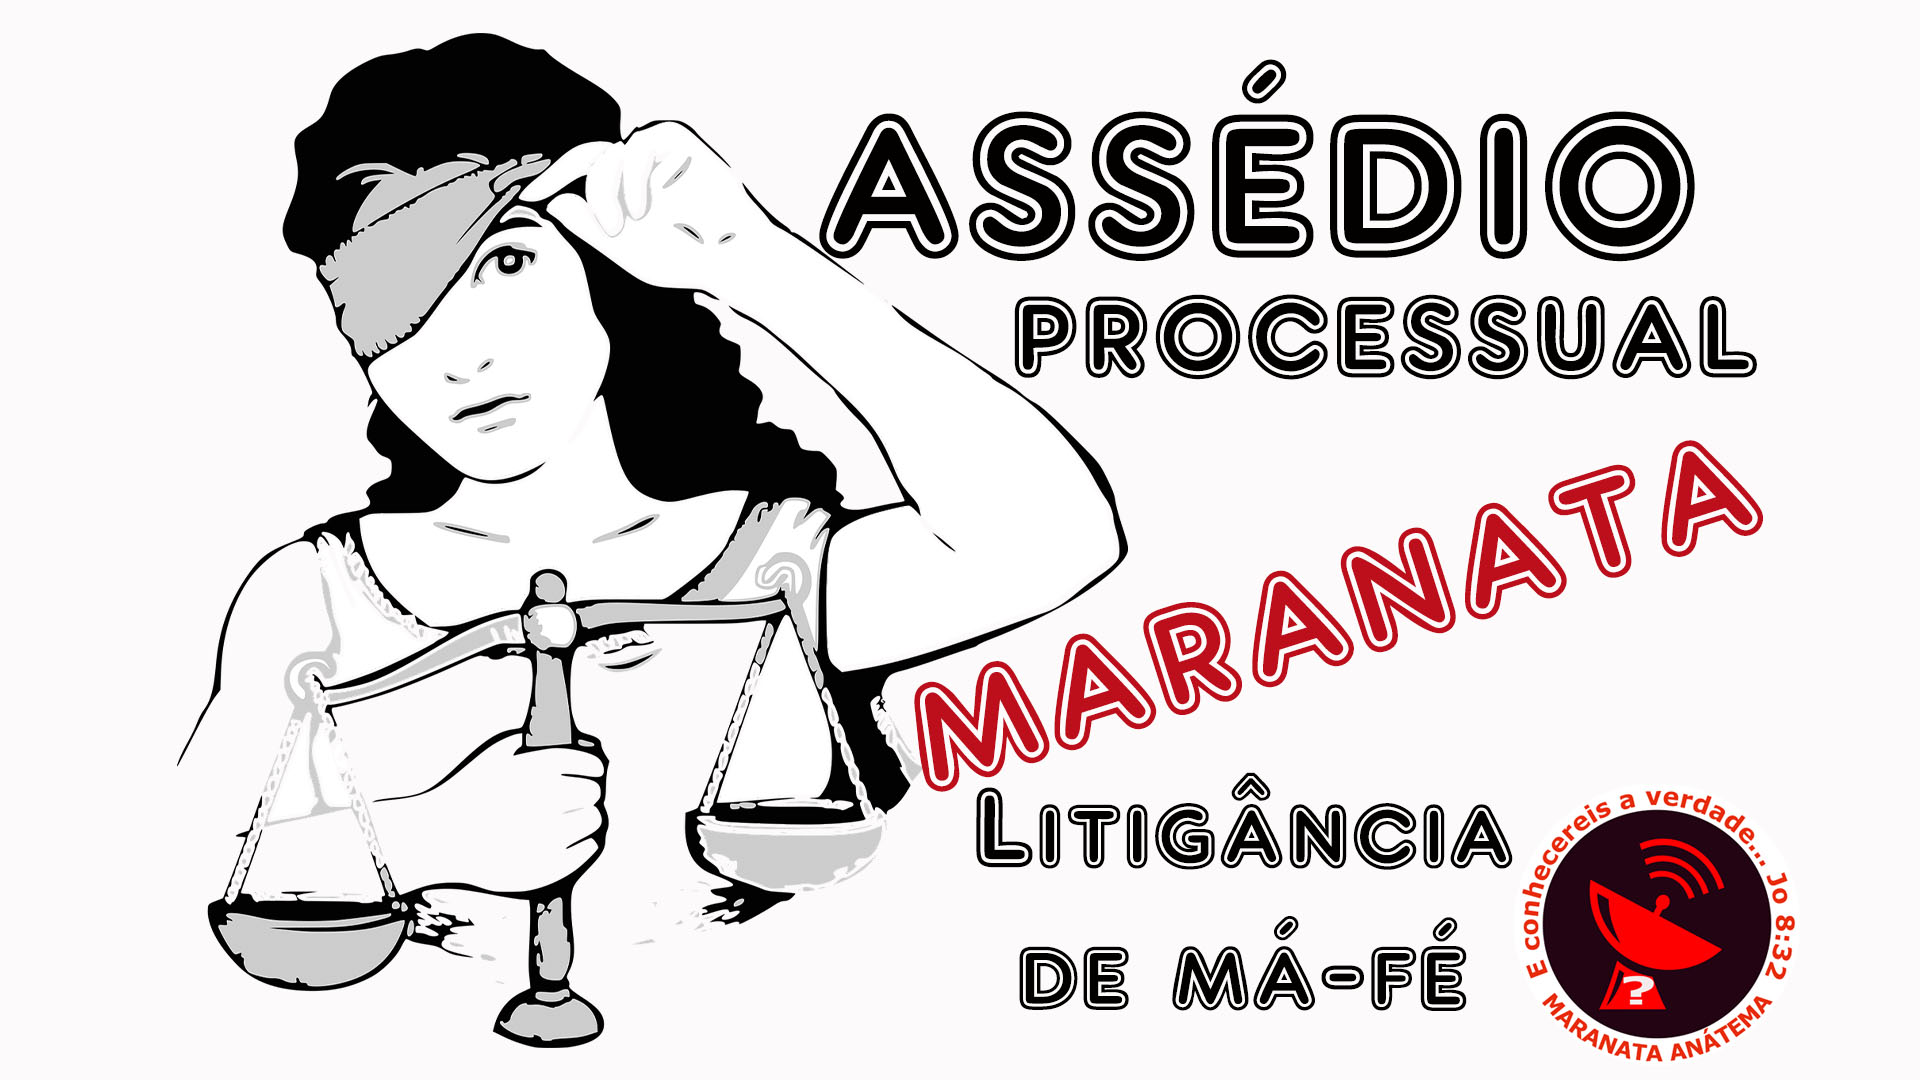 07 – O assédio processual da Maranata